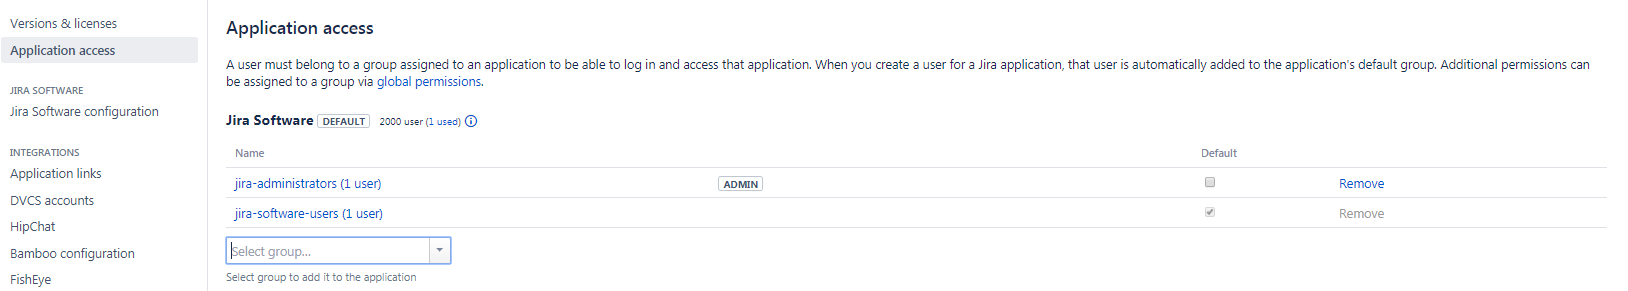 Application access selection